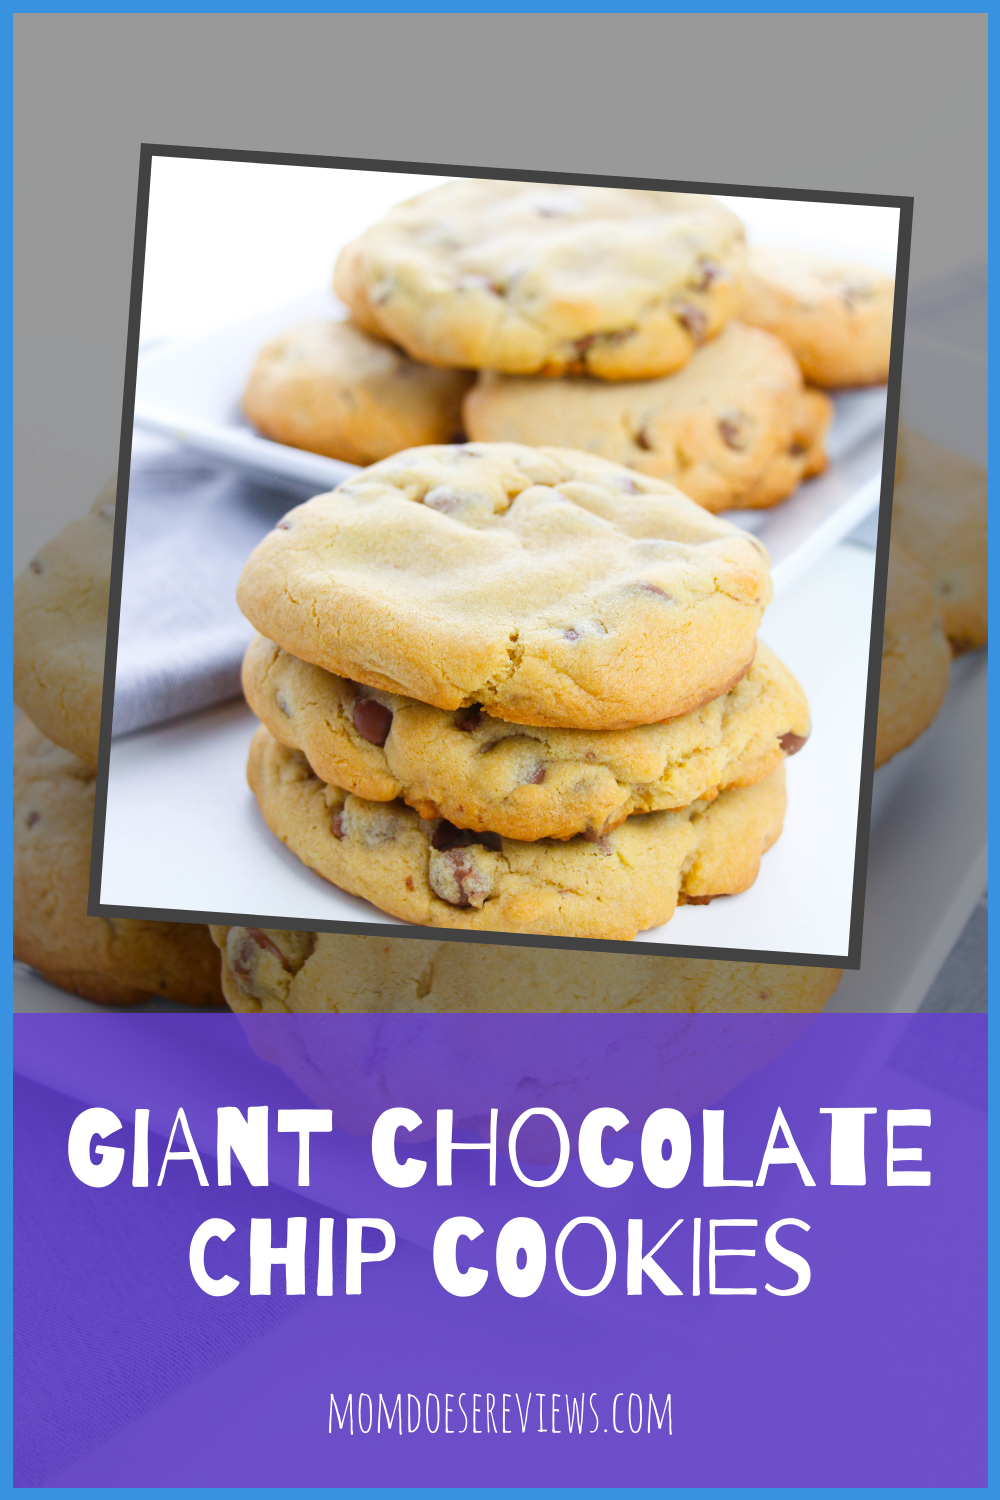 Giant Chocolate Chip Cookies #recipe #cookierecipe #chocolatechips